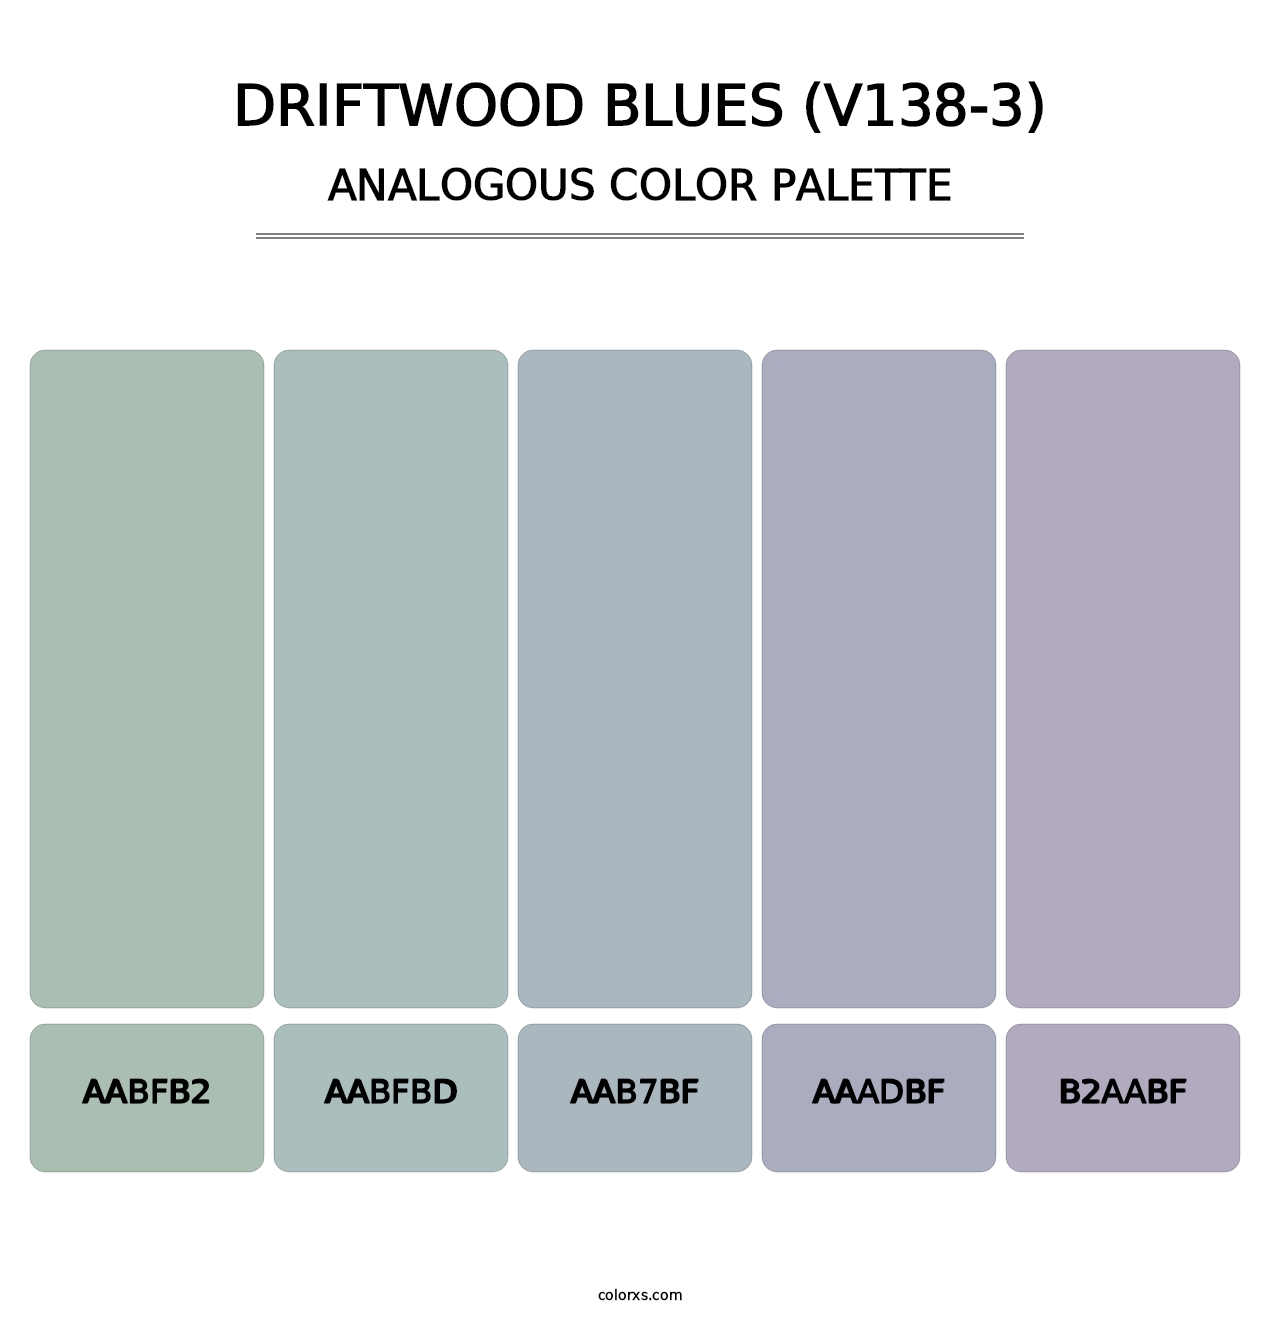 Driftwood Blues (V138-3) - Analogous Color Palette